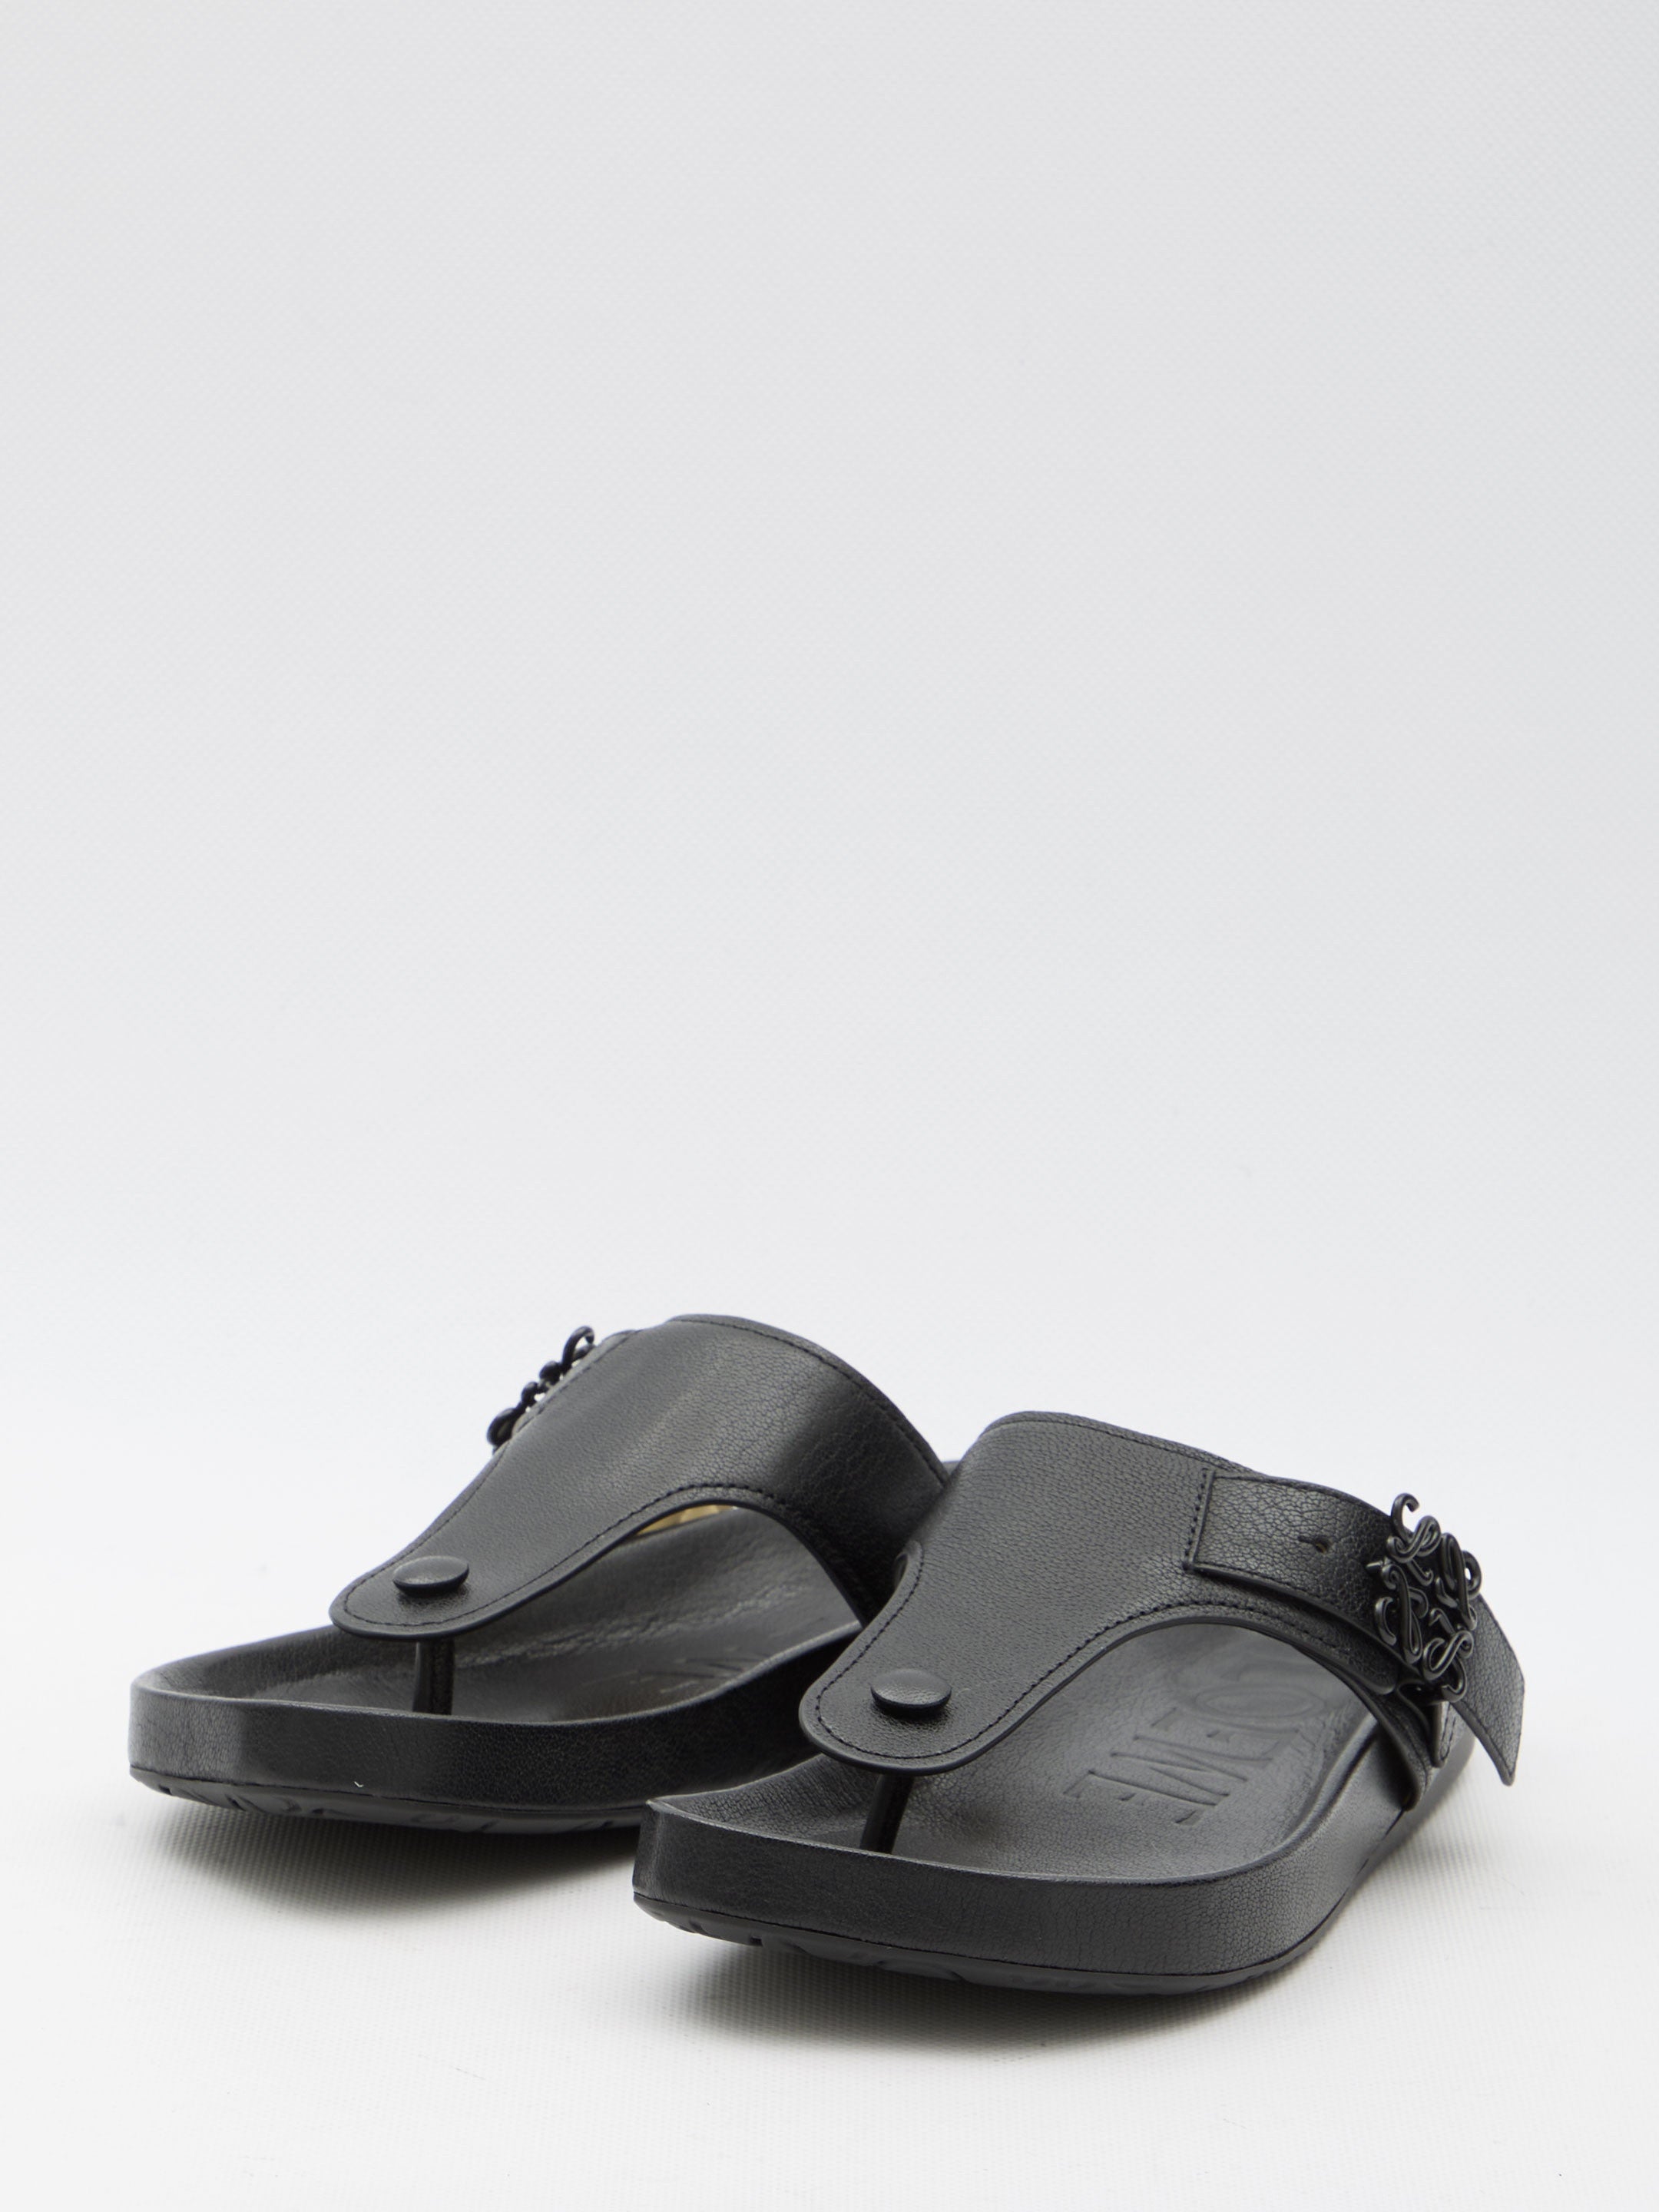 LOEWE-OUTLET-SALE-Ease-sandals-Sandalen-ARCHIVE-COLLECTION-2.jpg